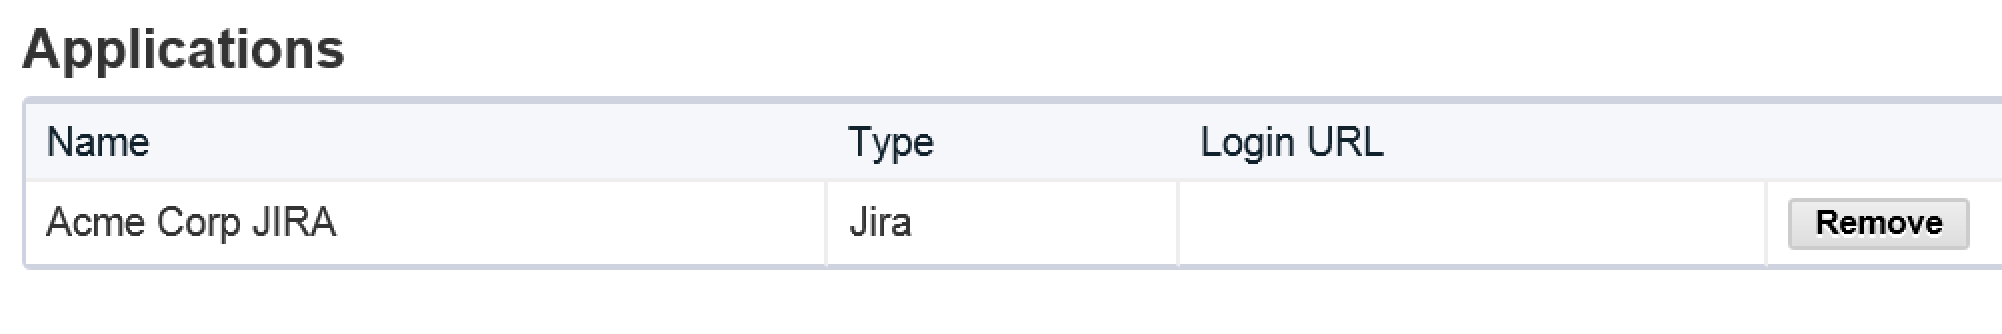 JIRA Application Added